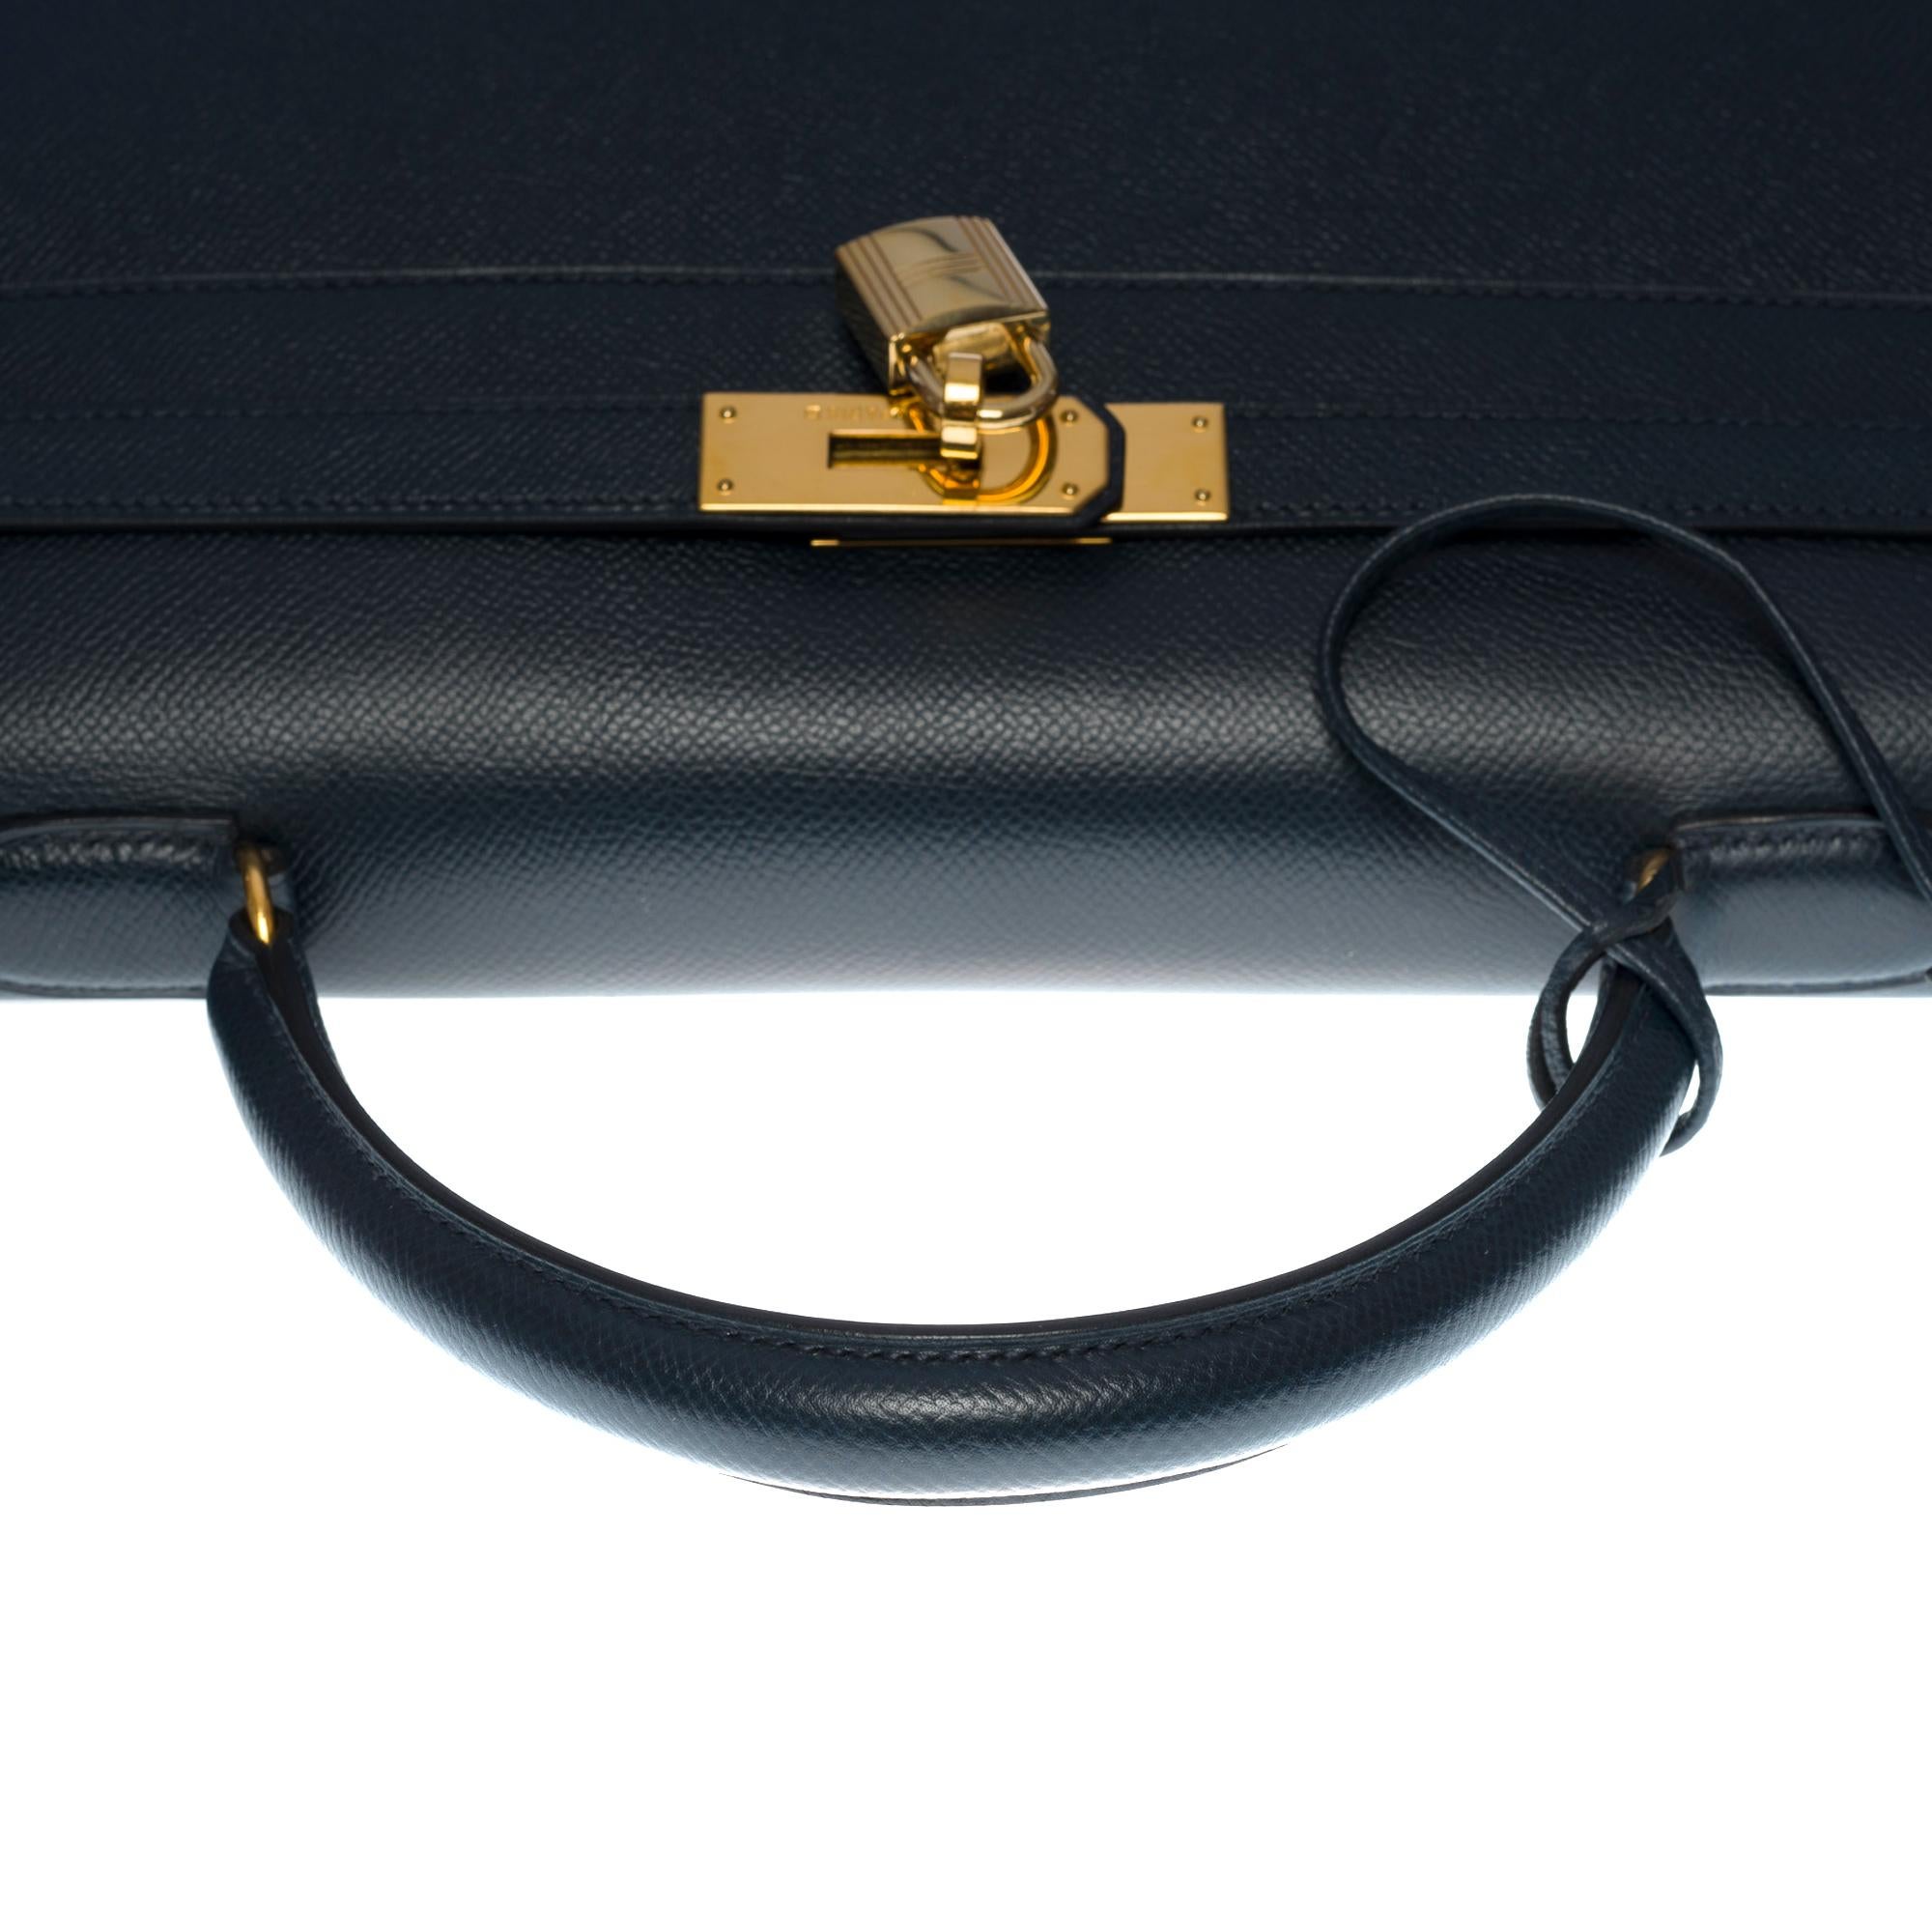 Hermès Kelly 35 sellier handbag strap in Courchevel bleu nuit leather, GHW 1